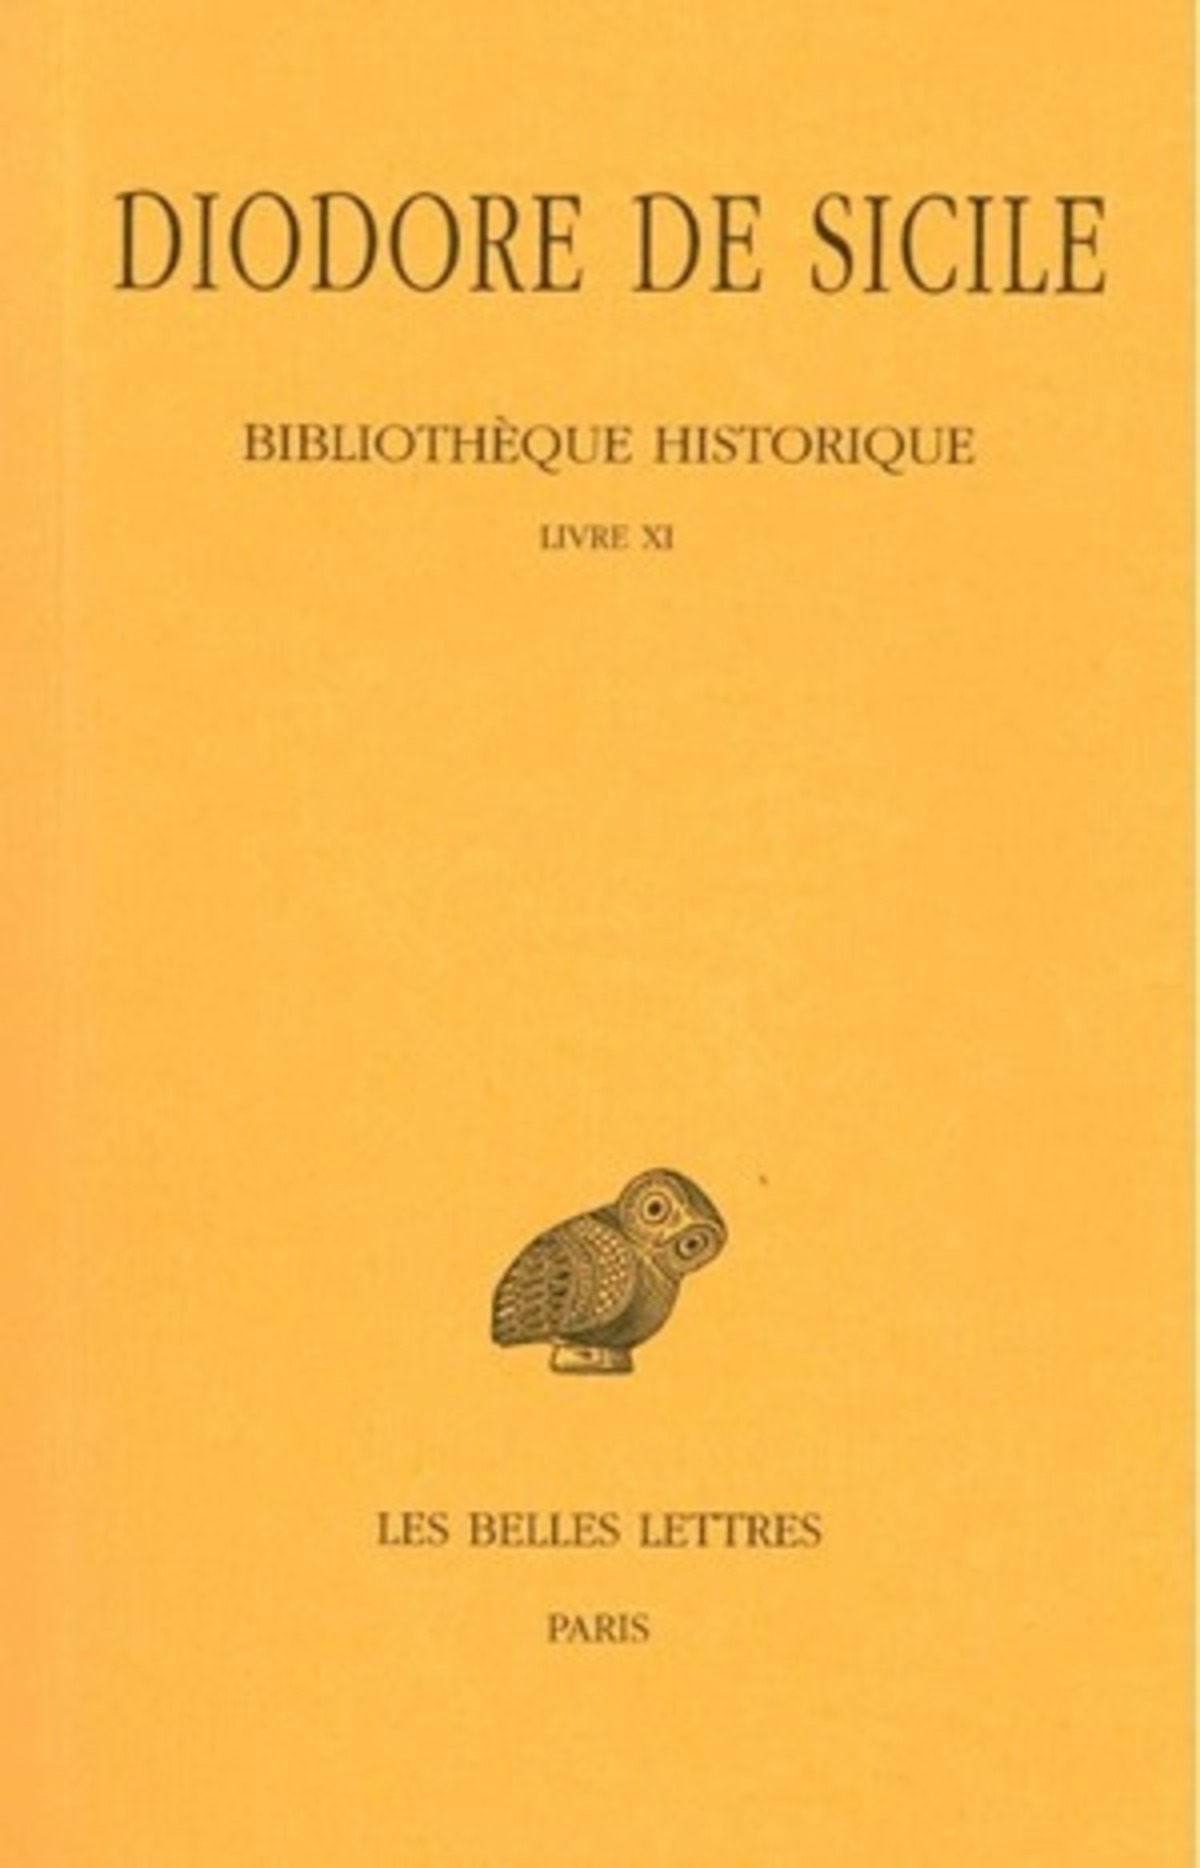 Bibliothèque historique. Tome VI : Livre XI